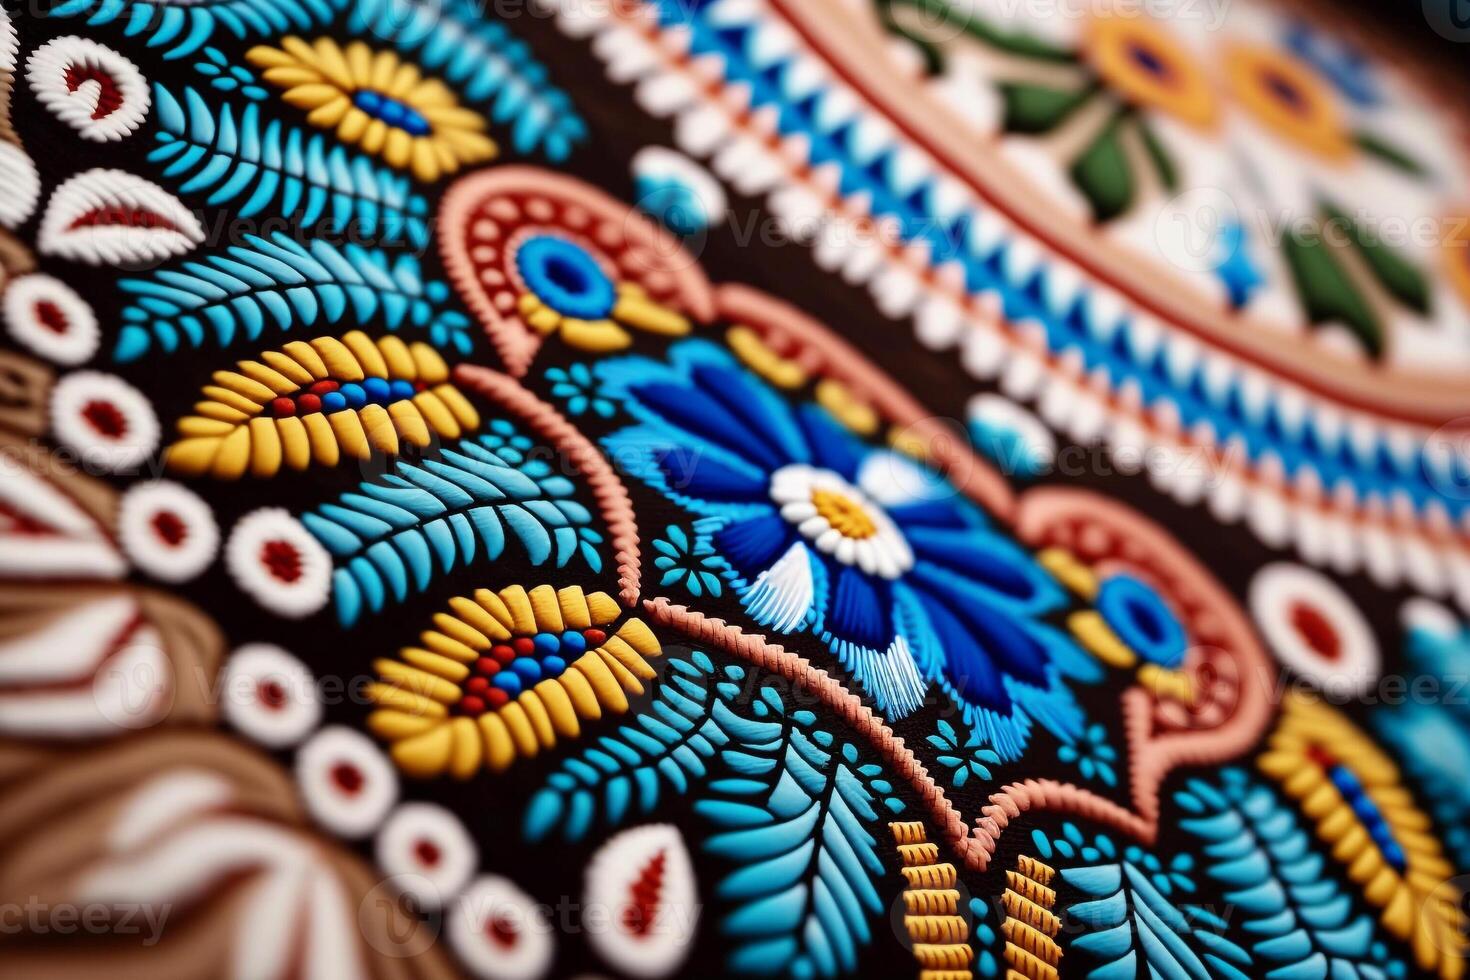 ukrainian vyshyvanka, handmade embroidery on fabrics with colored patterns photo